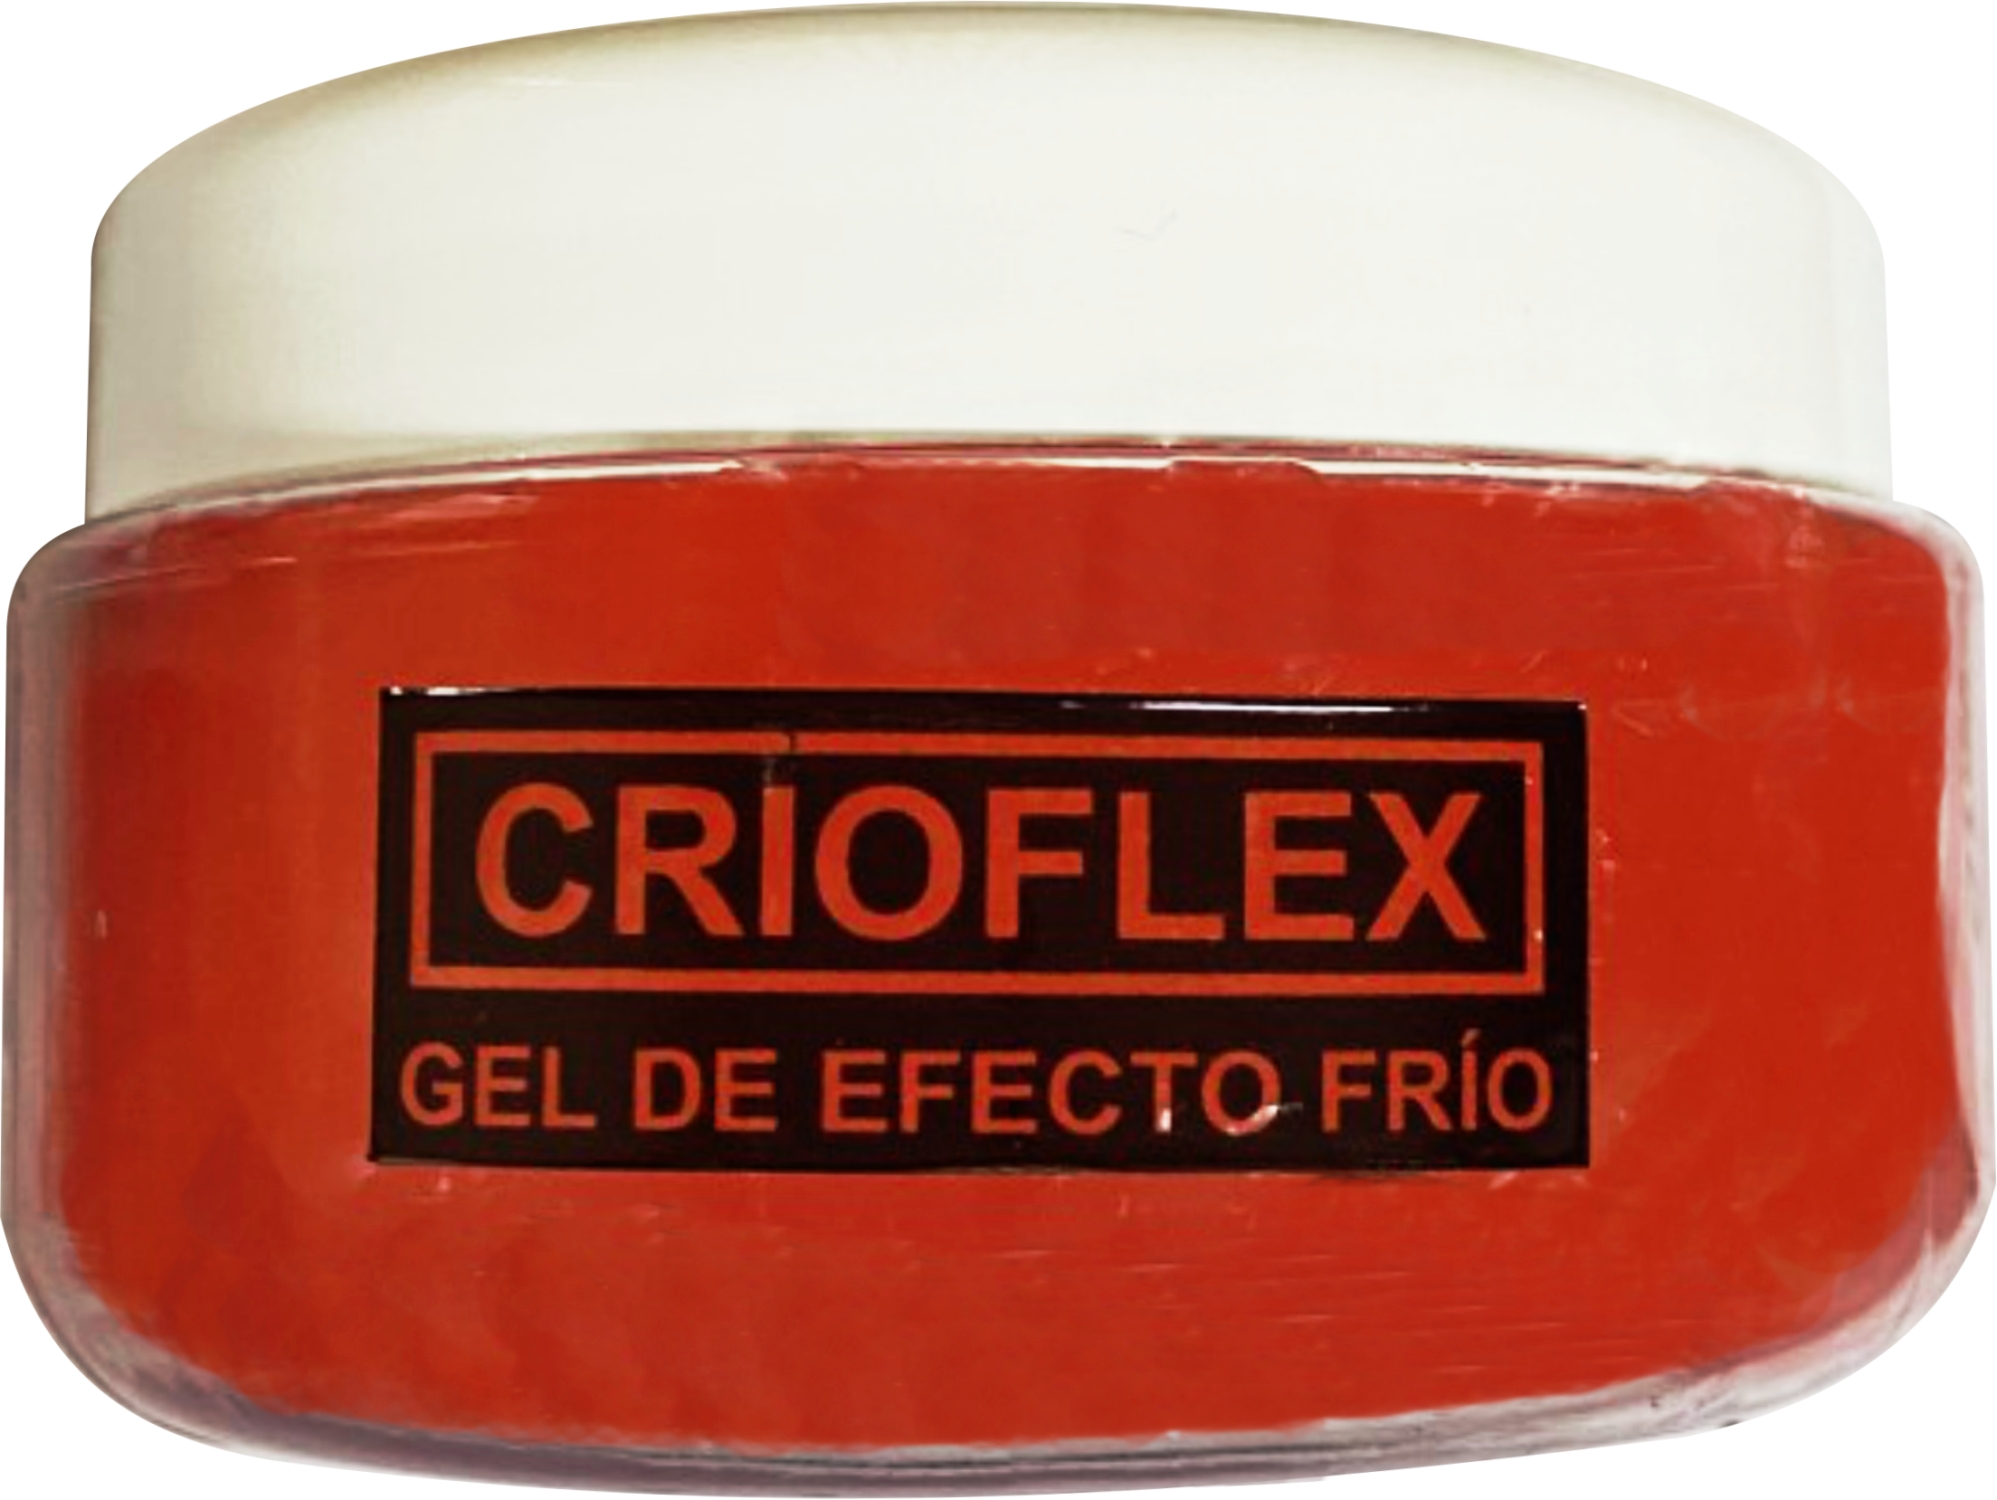 crioflex image